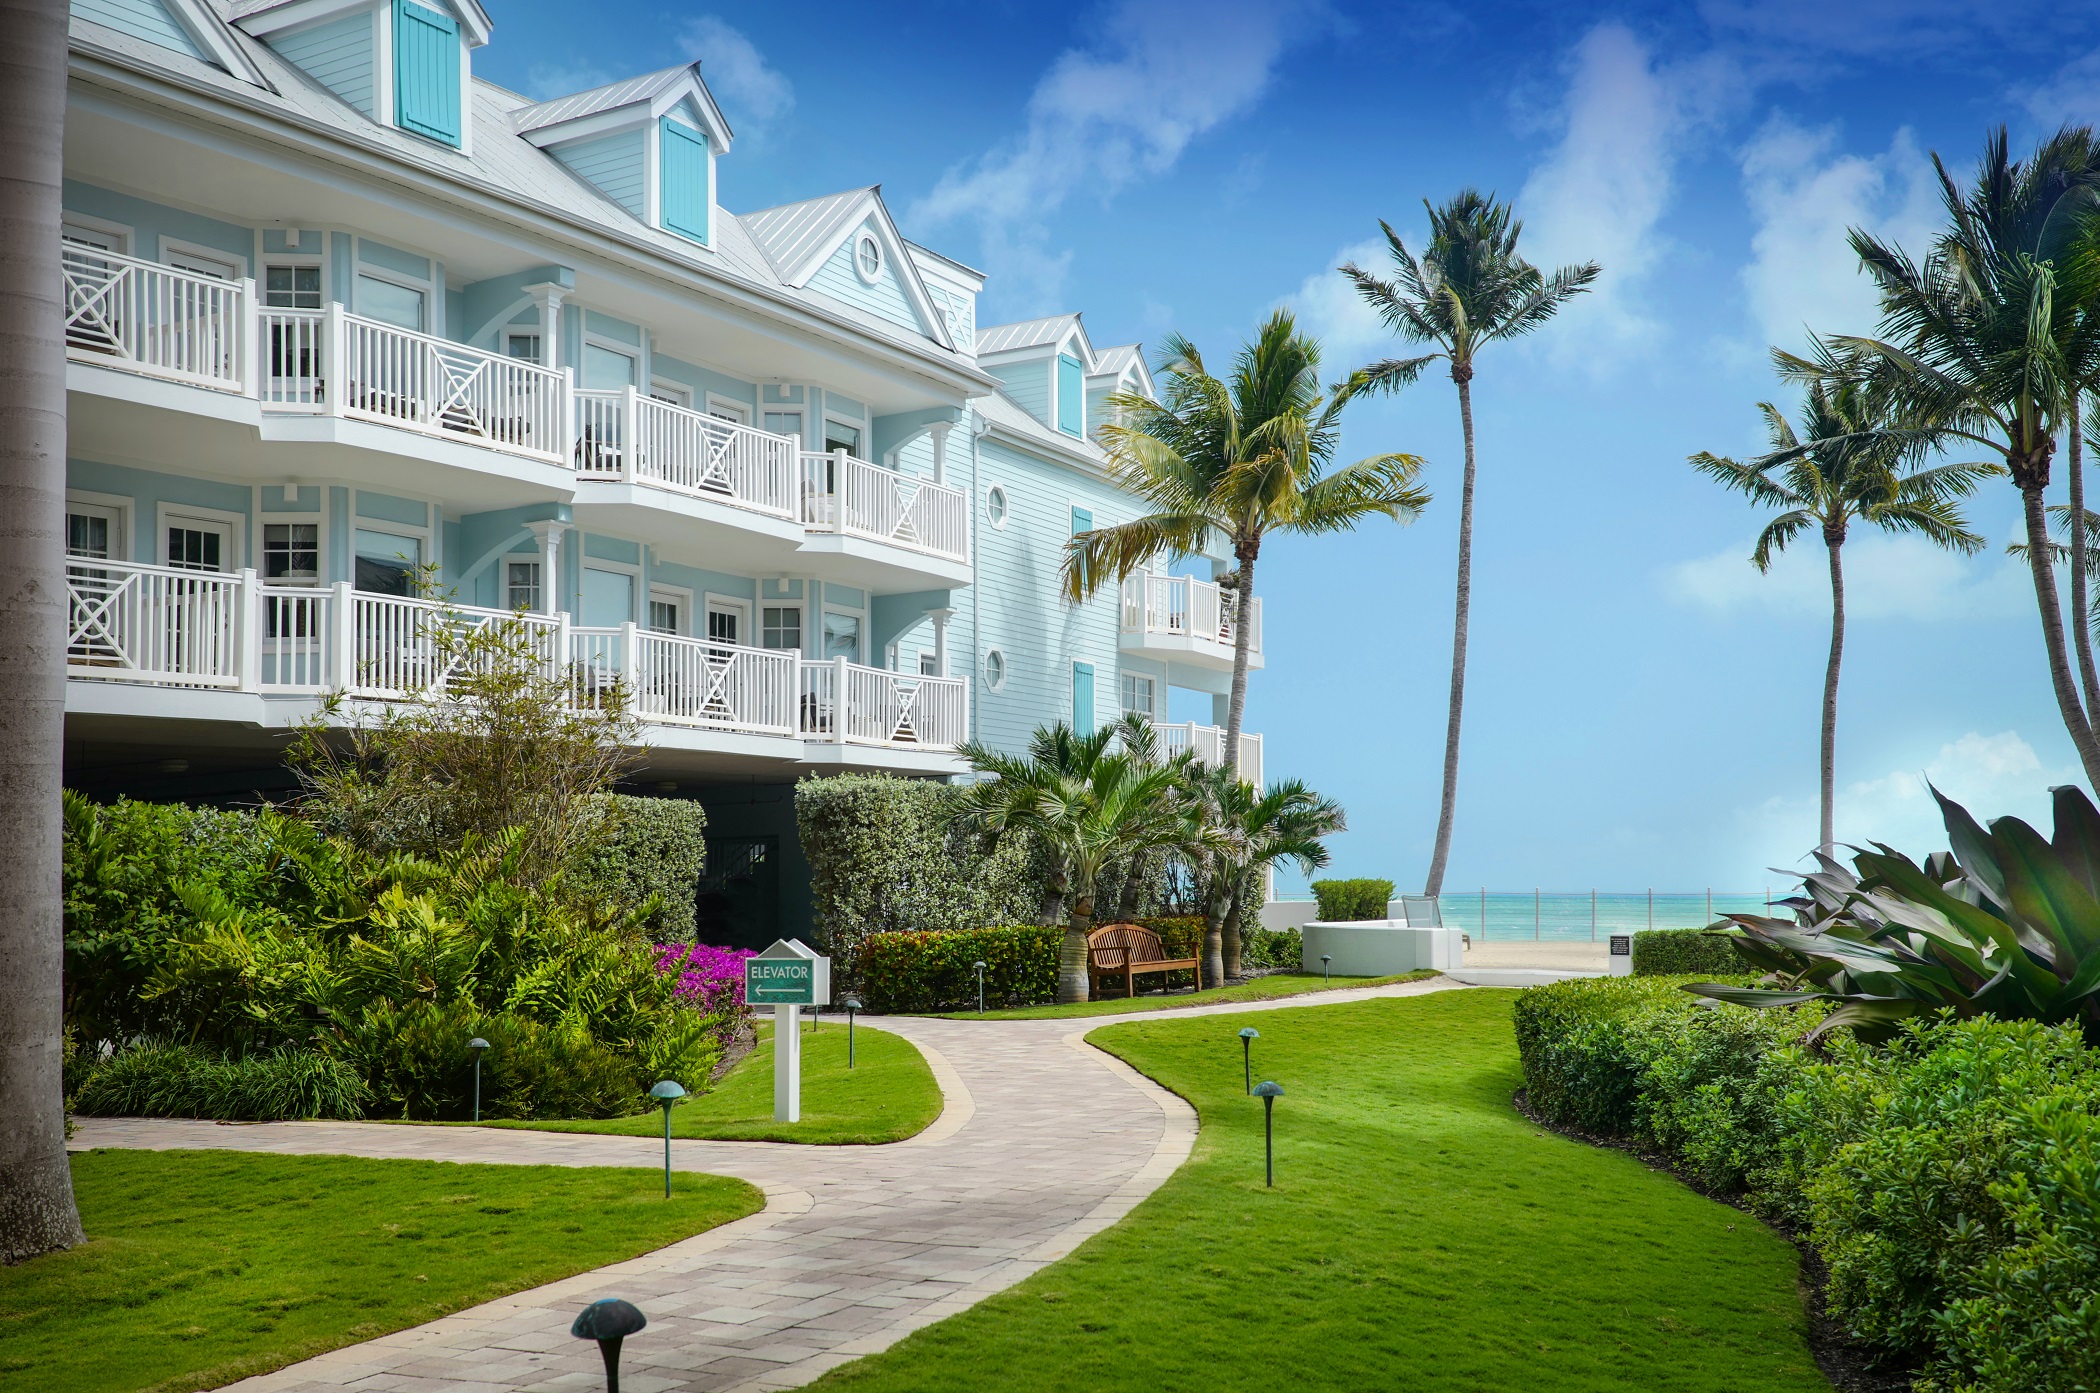 Southernmost Beach Resort – Key West, FL